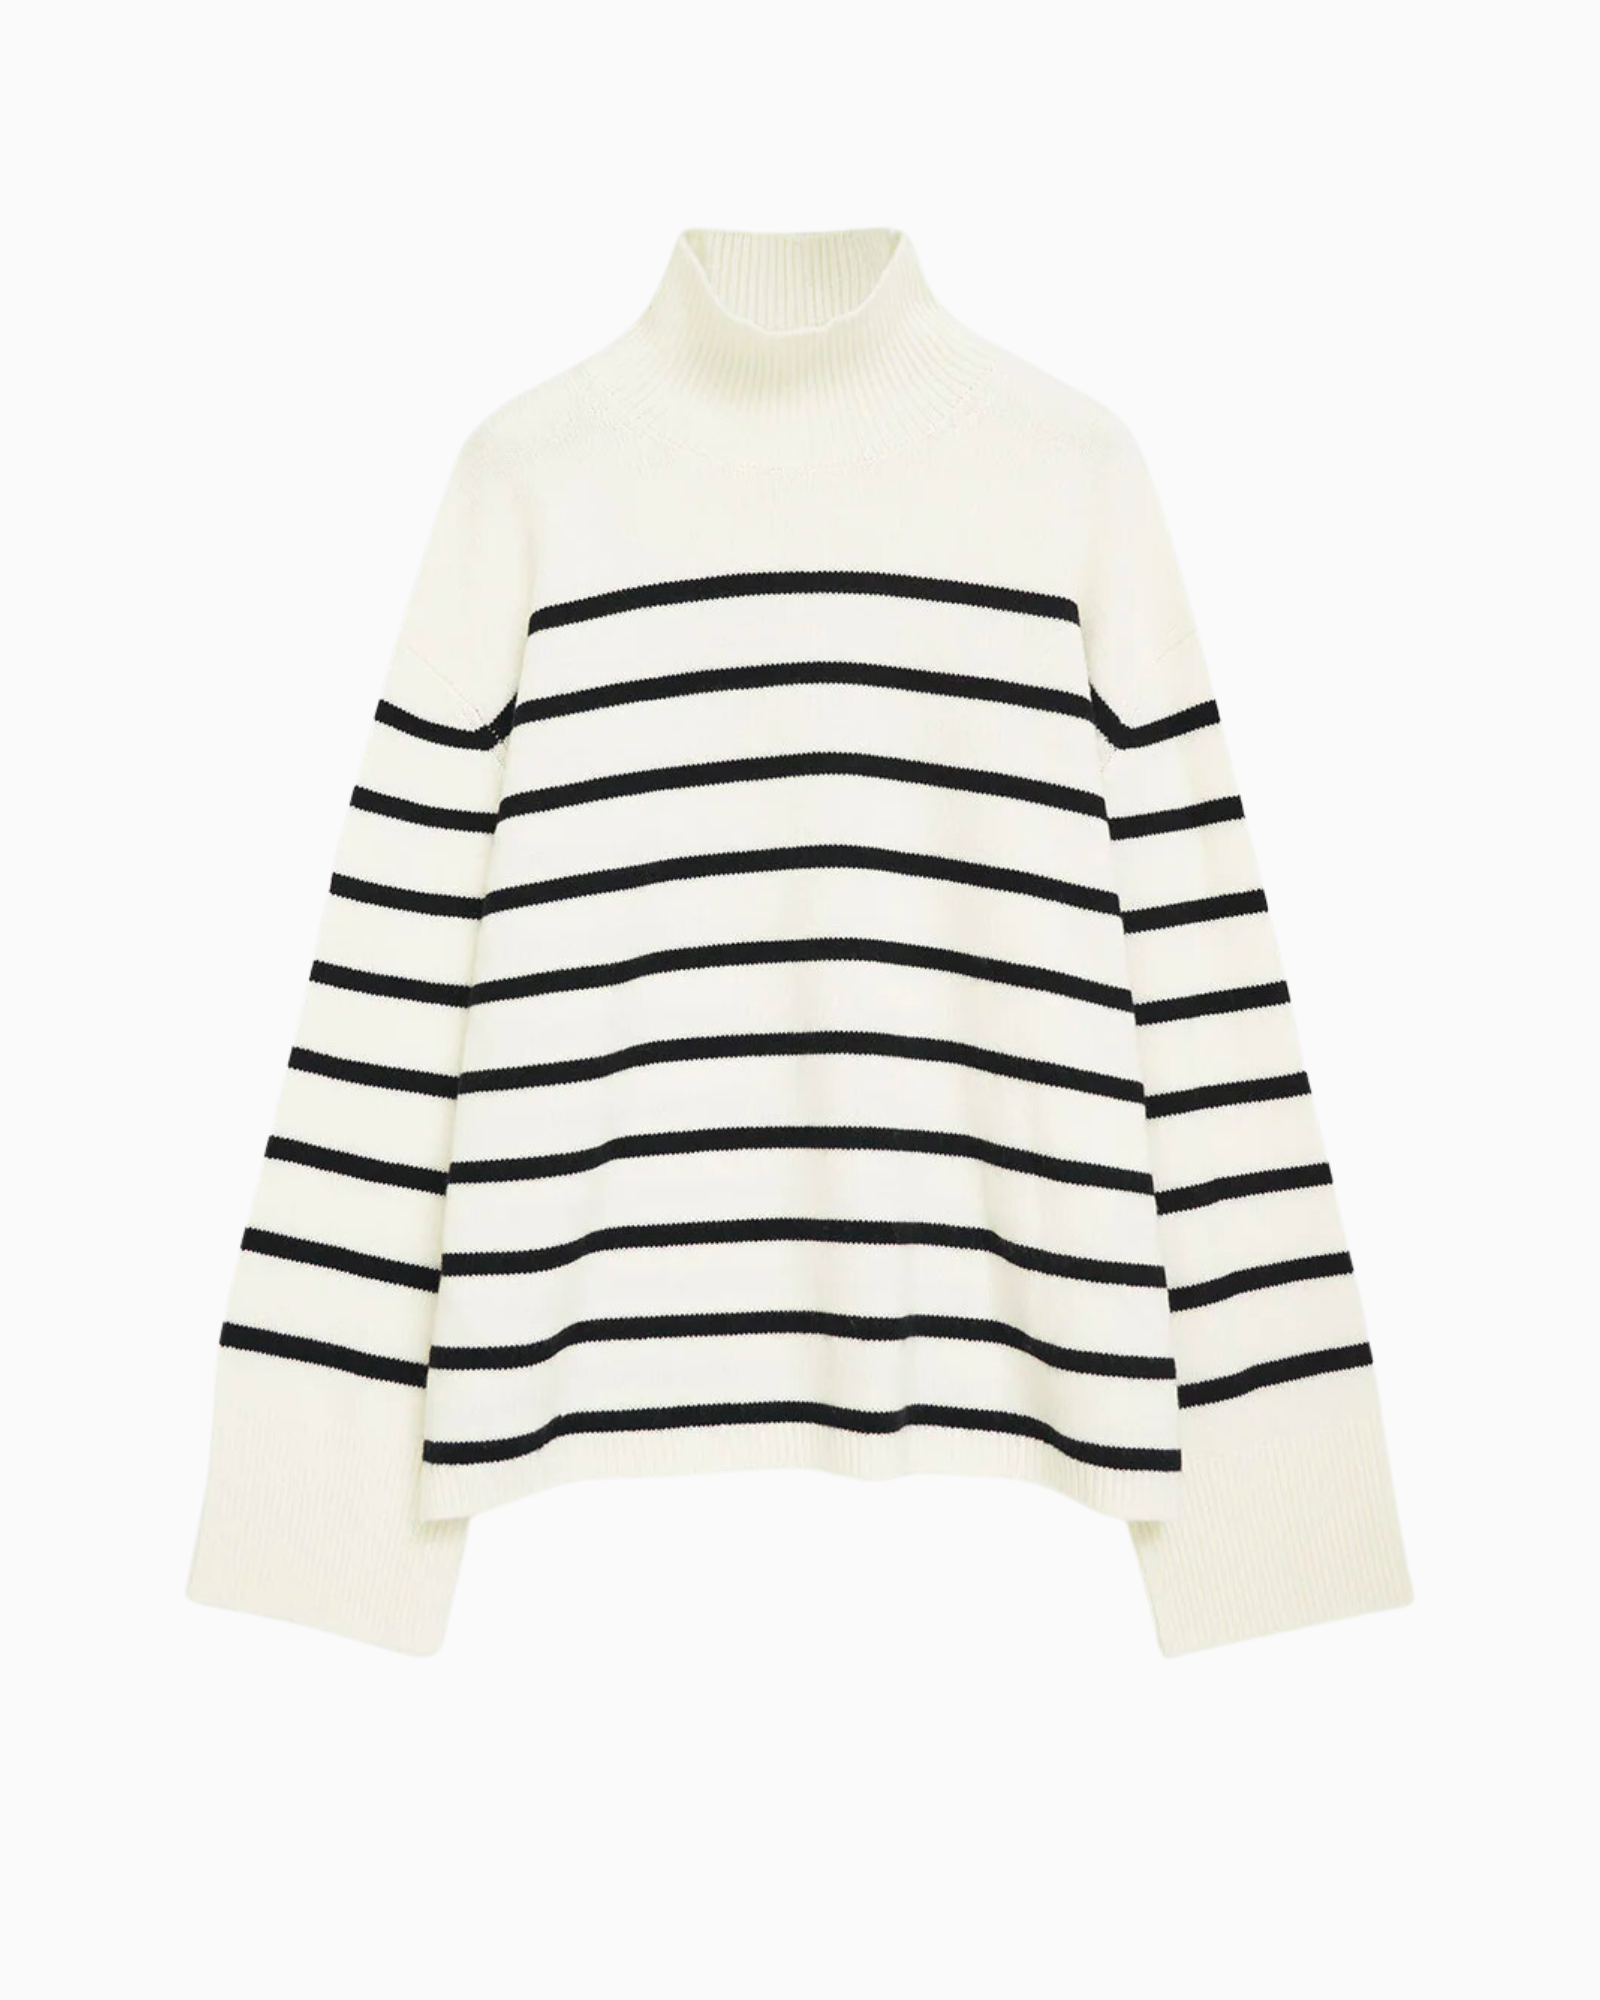 Anine Bing Courtney Sweater in Ivory Black Stripe